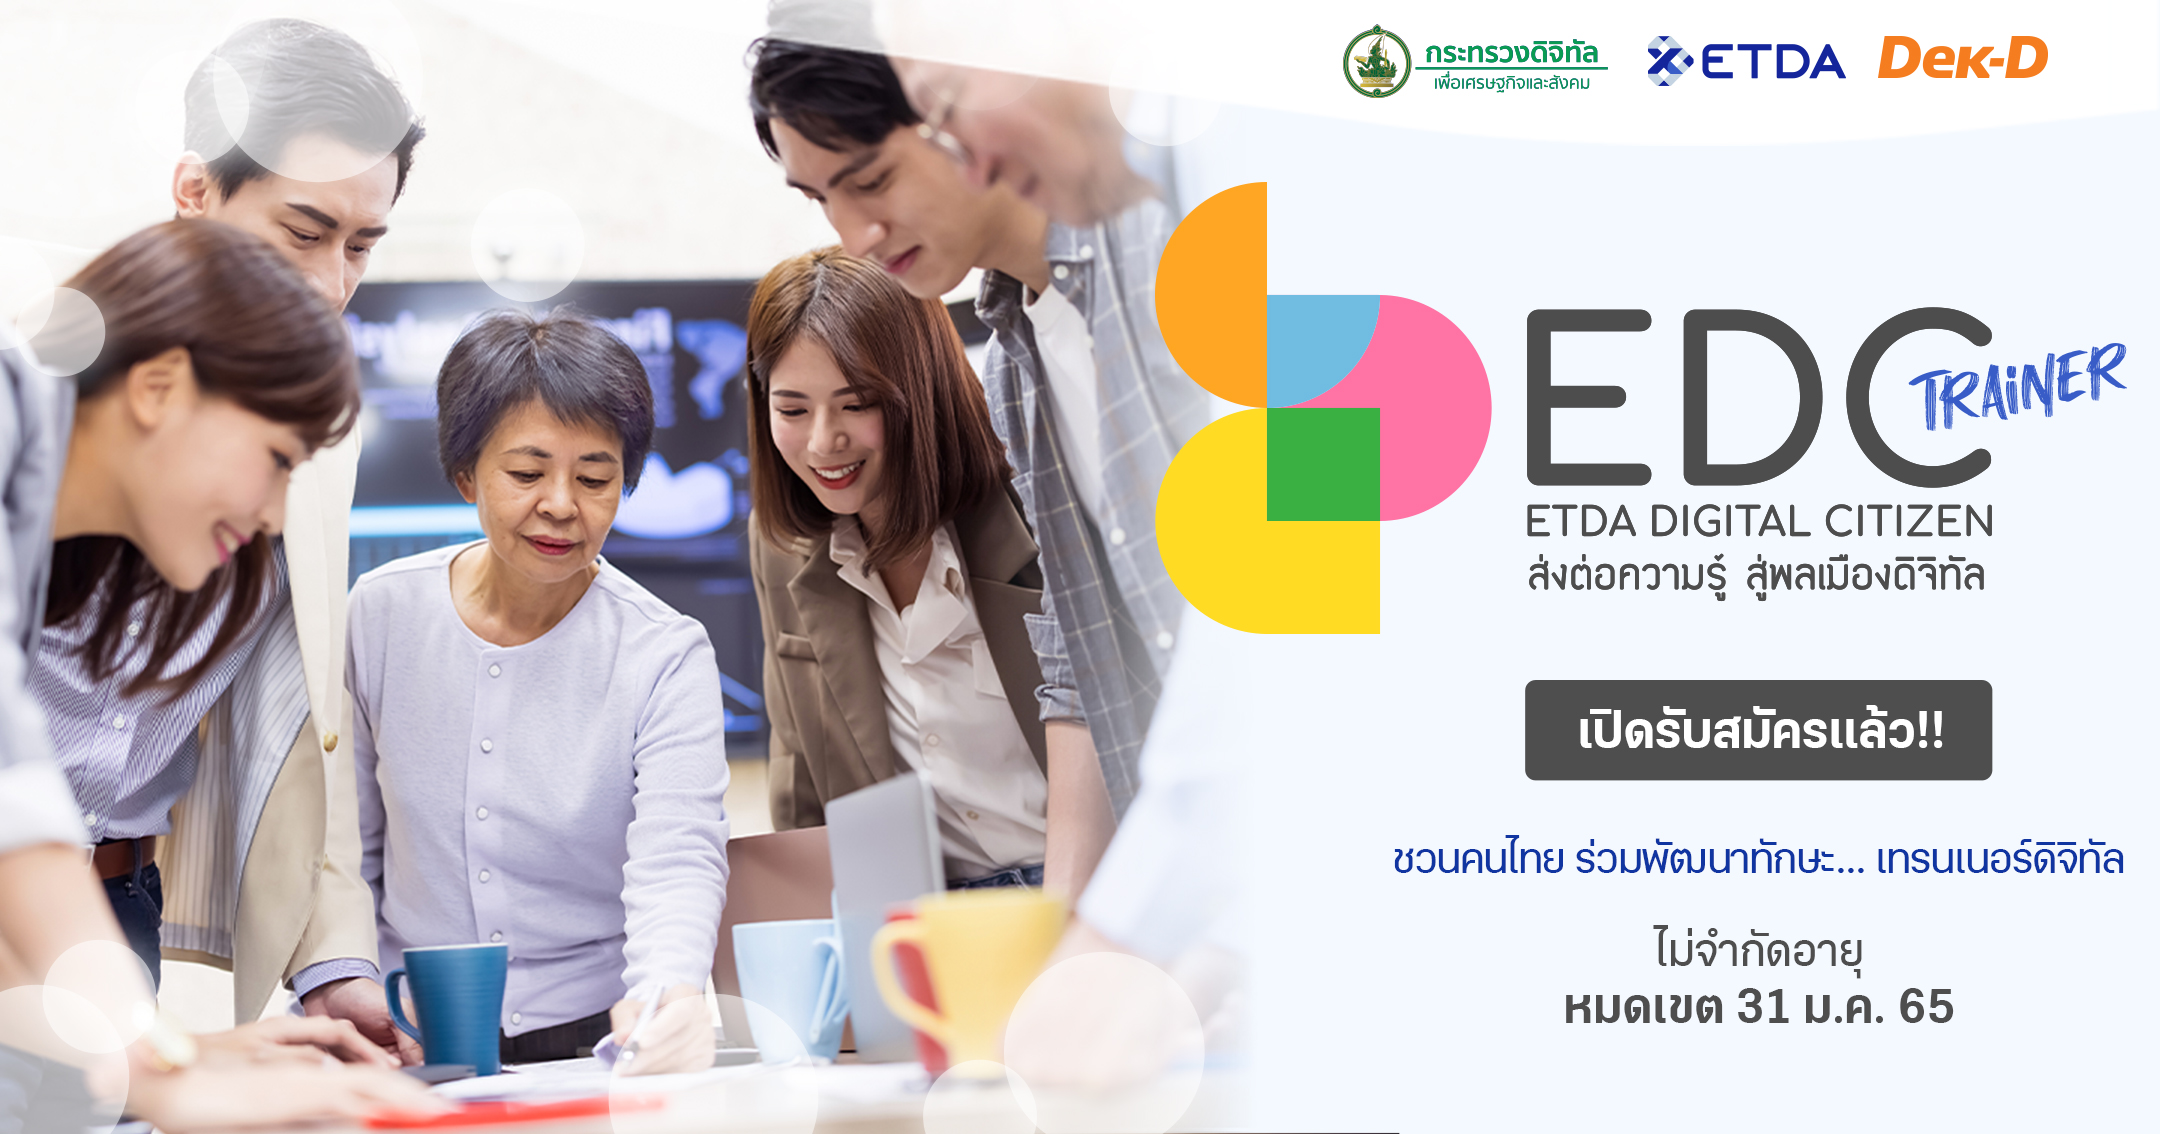 ETDA จับมือ Dek-D เปิดโปรเจก ETDA Digital Citizen Trainer ปั้นคนไทย สู่เทรนเนอร์ดิจิทัล ส่งต่อความรู